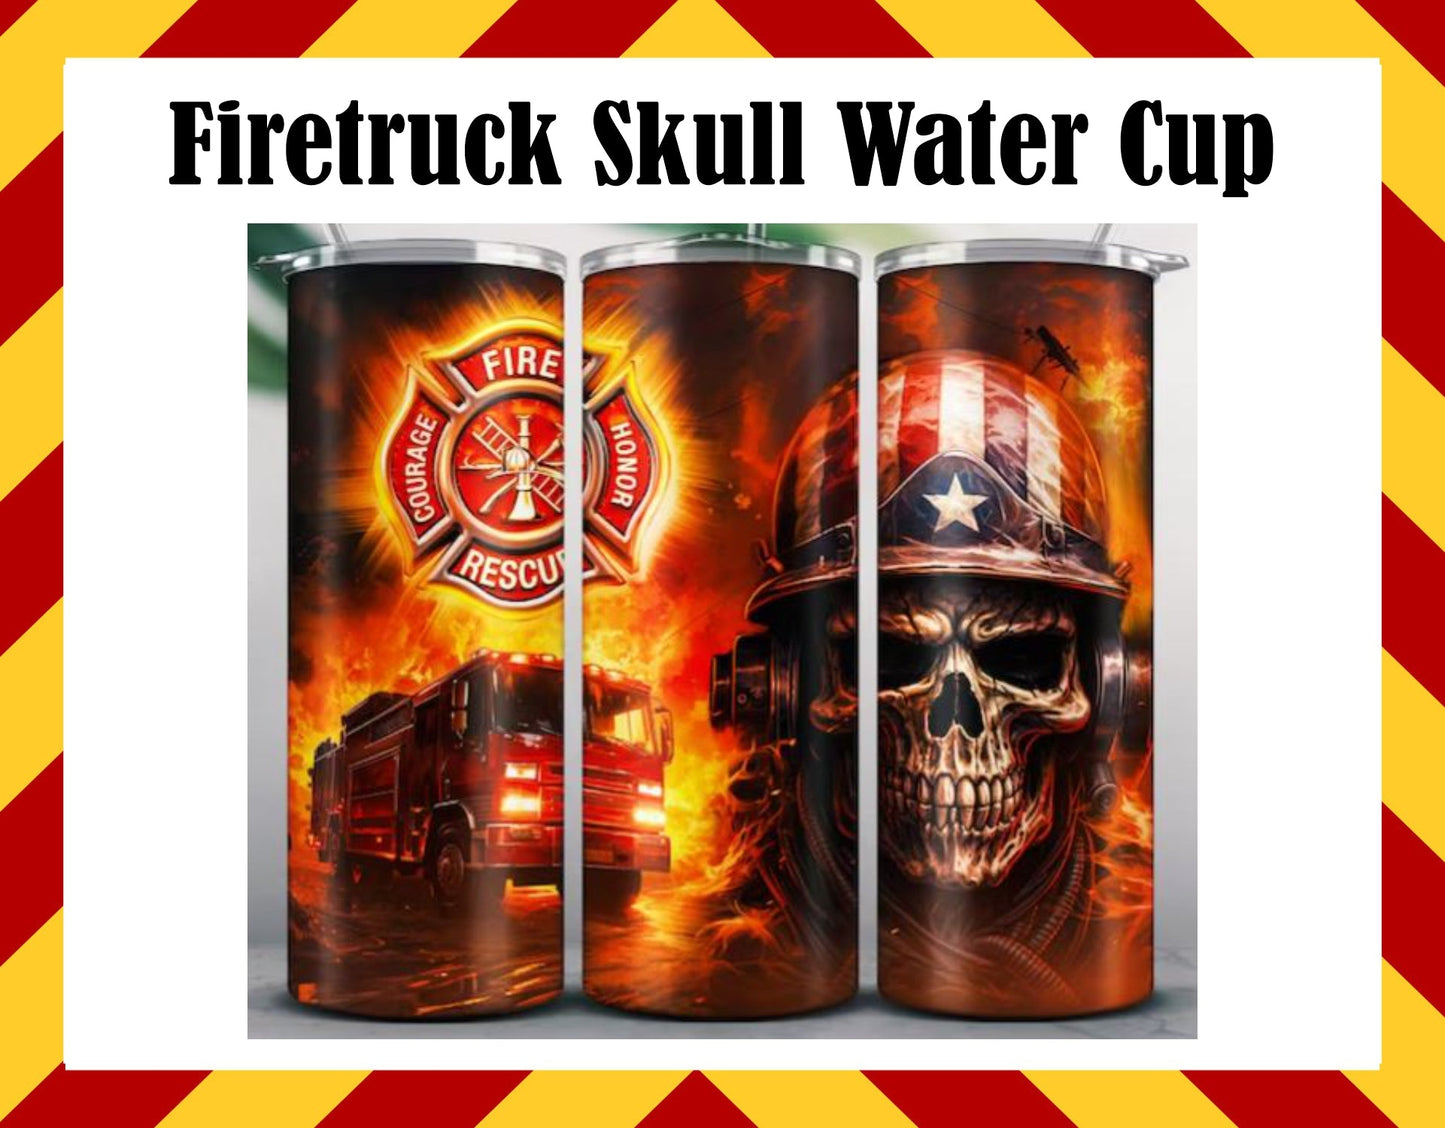 Drink Water Cup - Firetruck Skull Cup Design